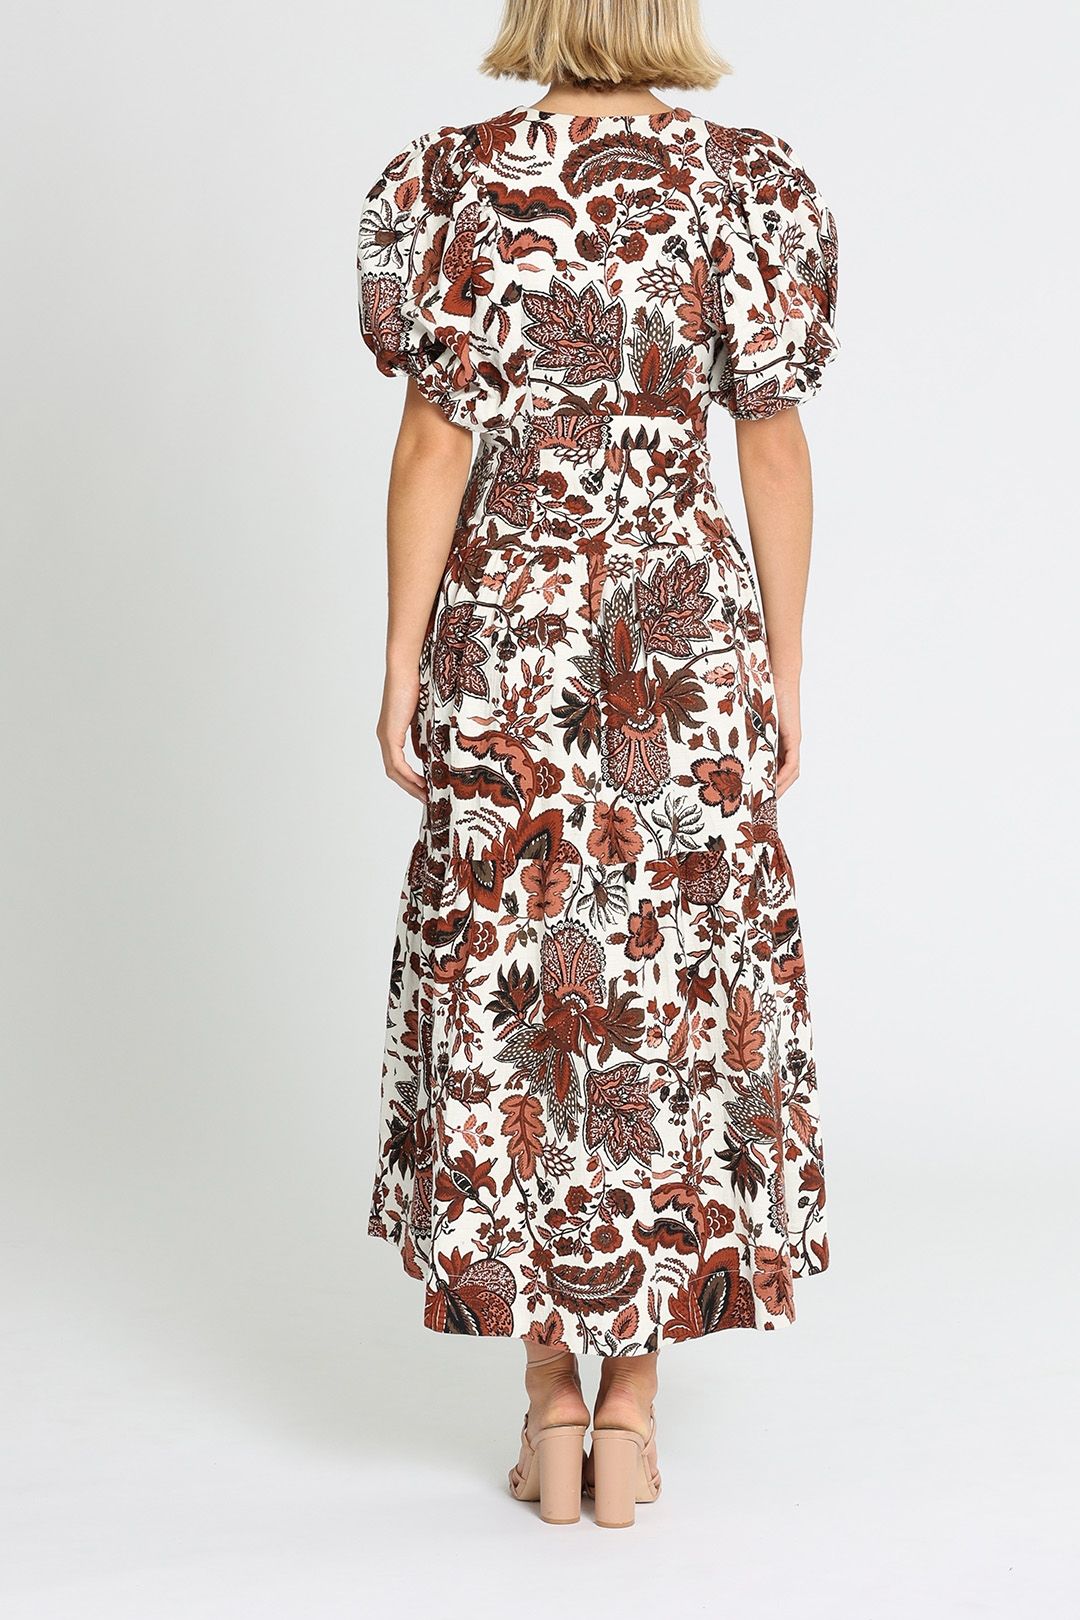 Shona Joy Catalina Plunged Short Sleeve Midi Dress Multi Print